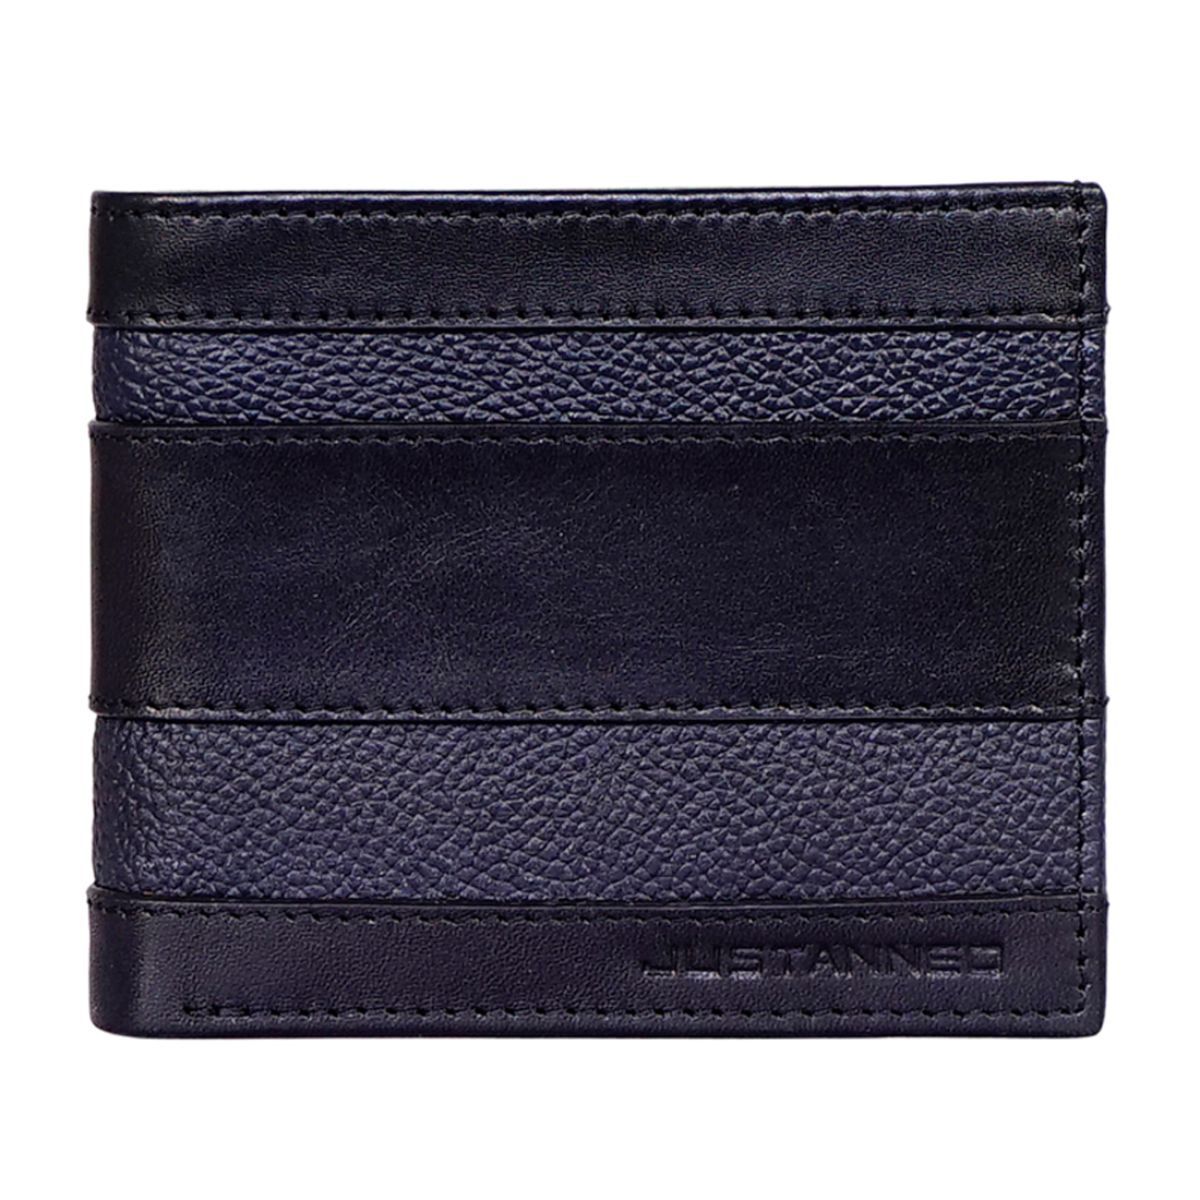 Justanned Men'S Full Grain Leather Wallet